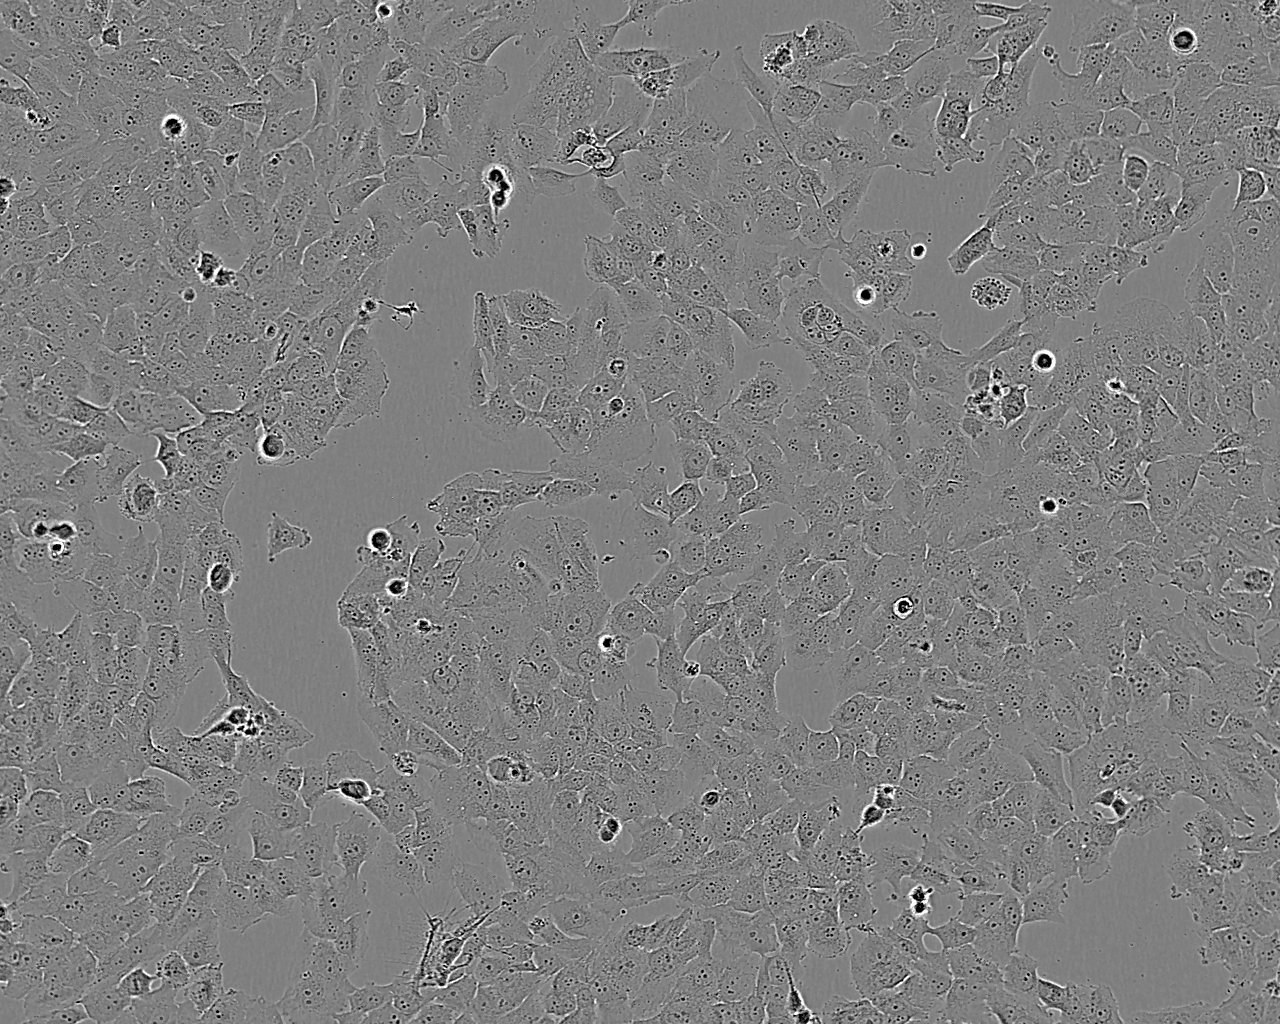 LA-N-5 Thawing人神经母细胞瘤细胞系